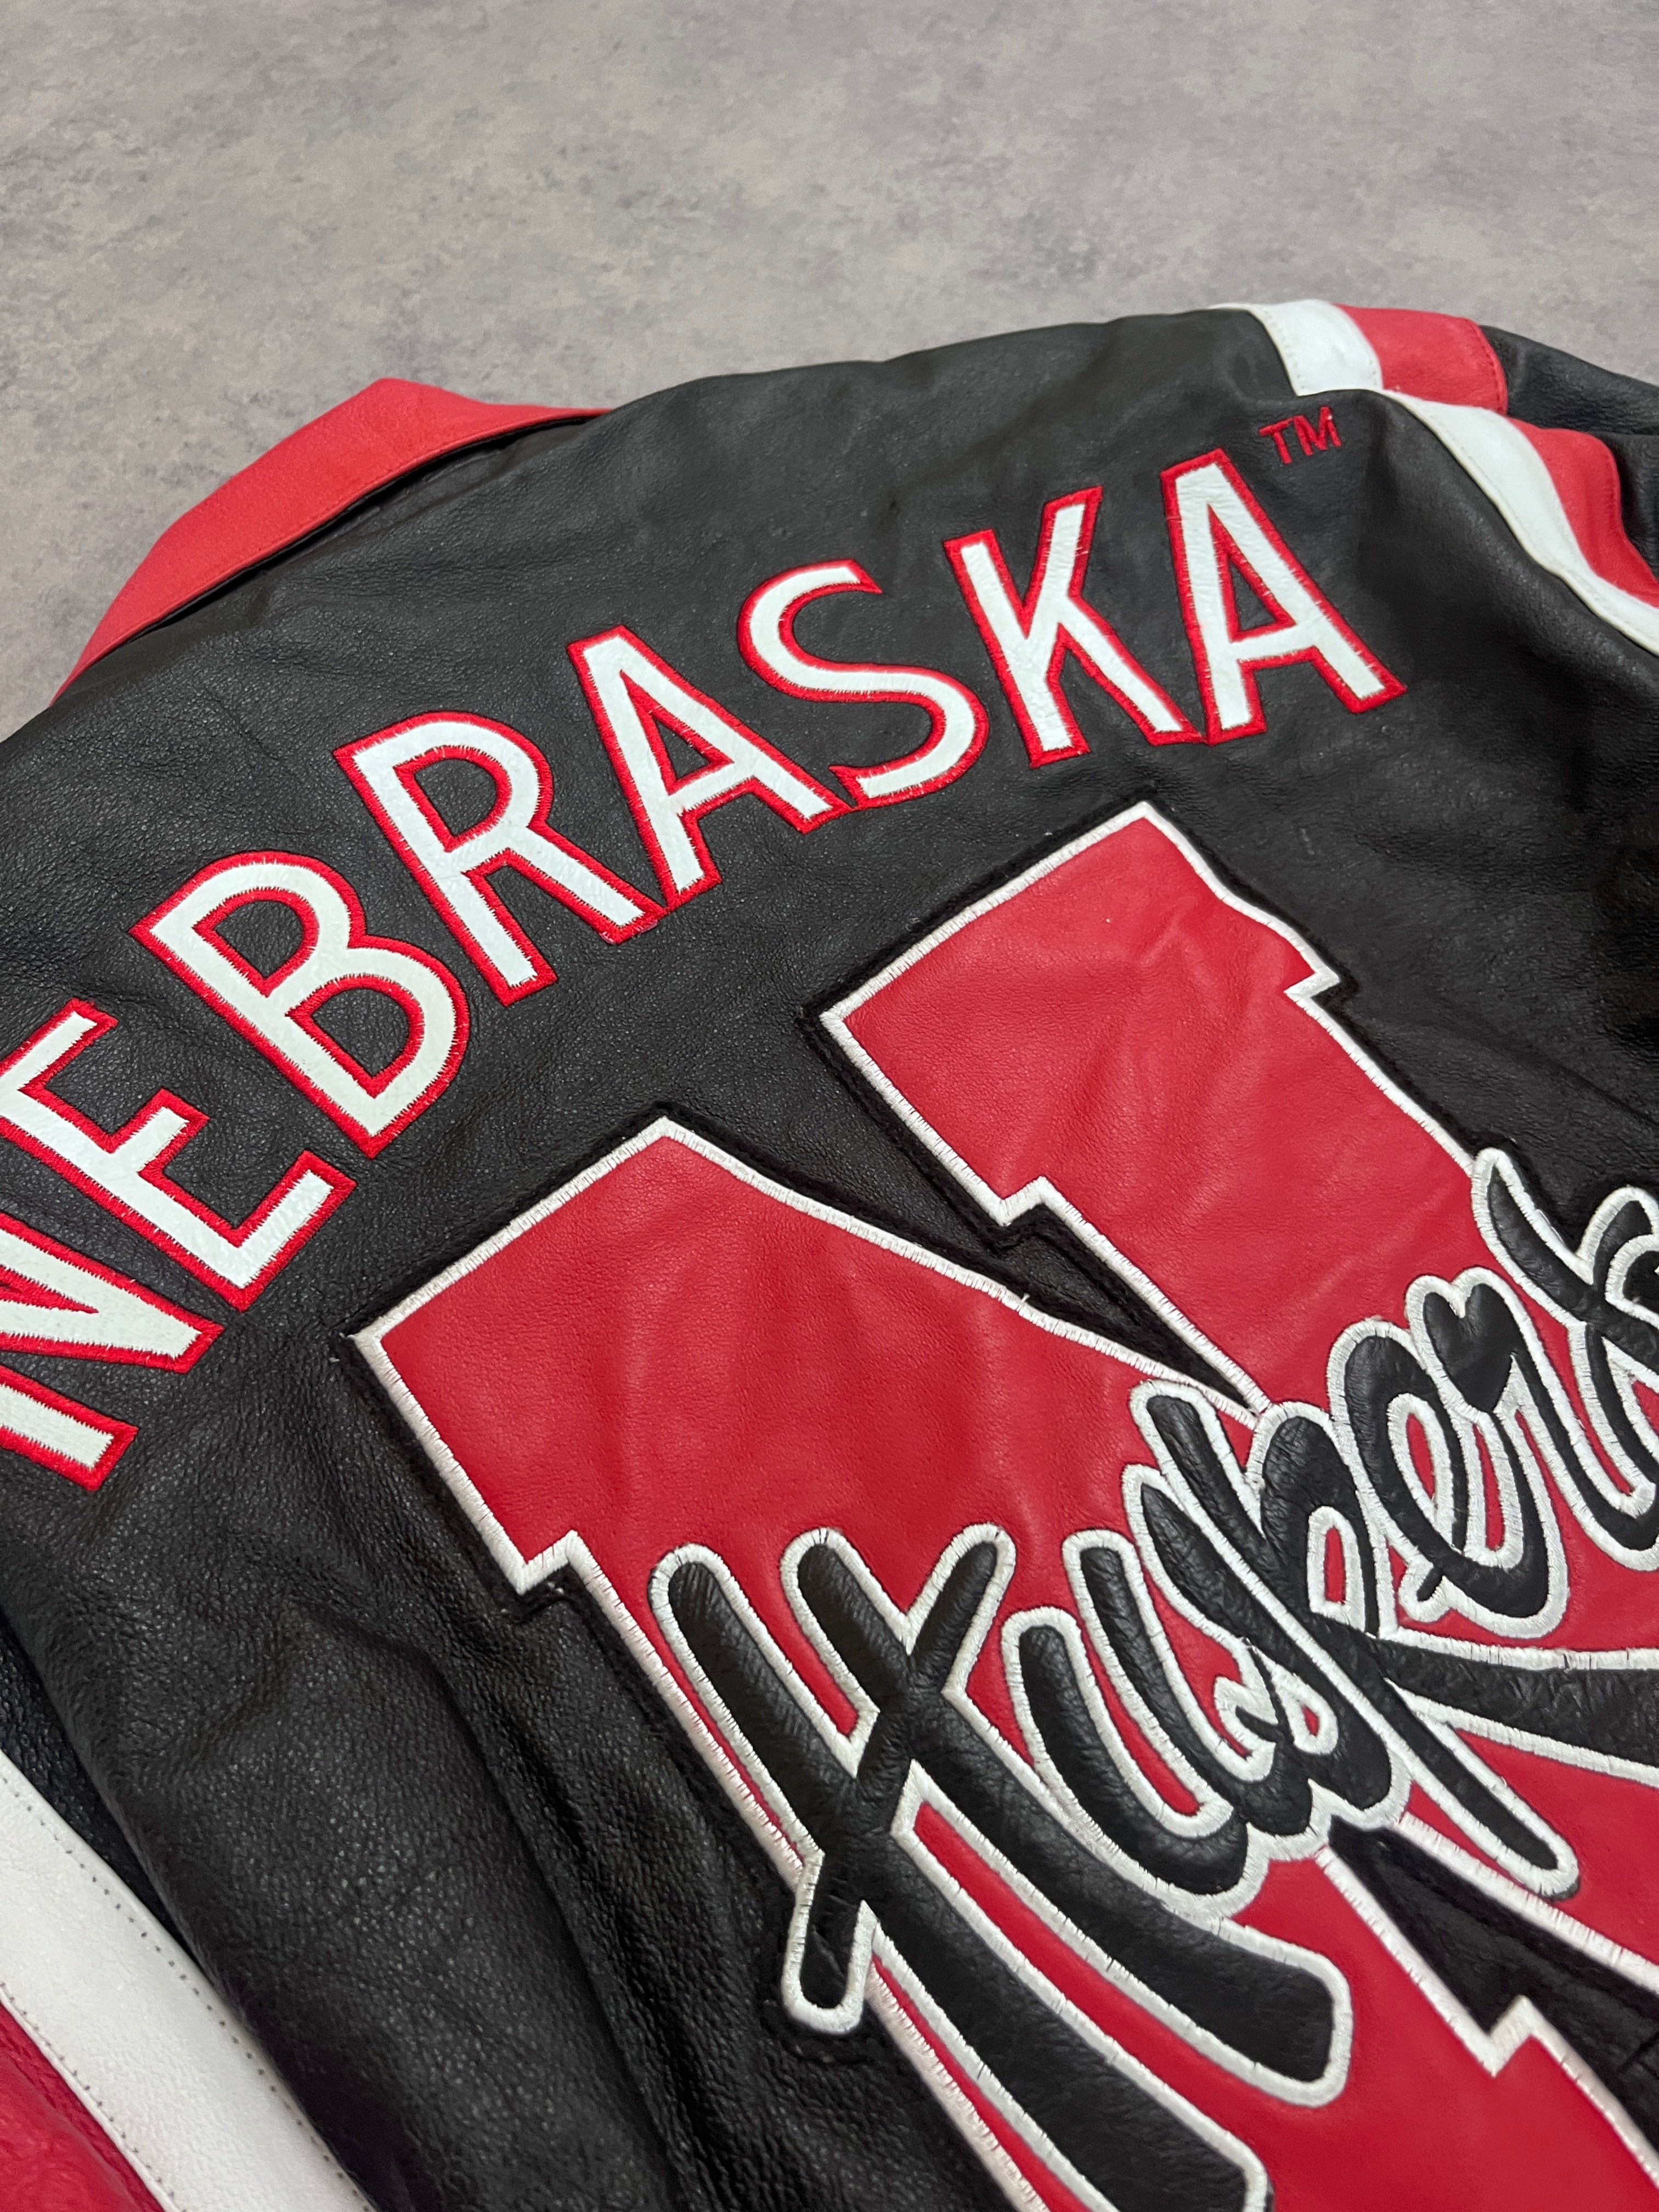 Vintage Nebraska Huskers Varsity Jacket Red // Medium - RHAGHOUSE VINTAGE